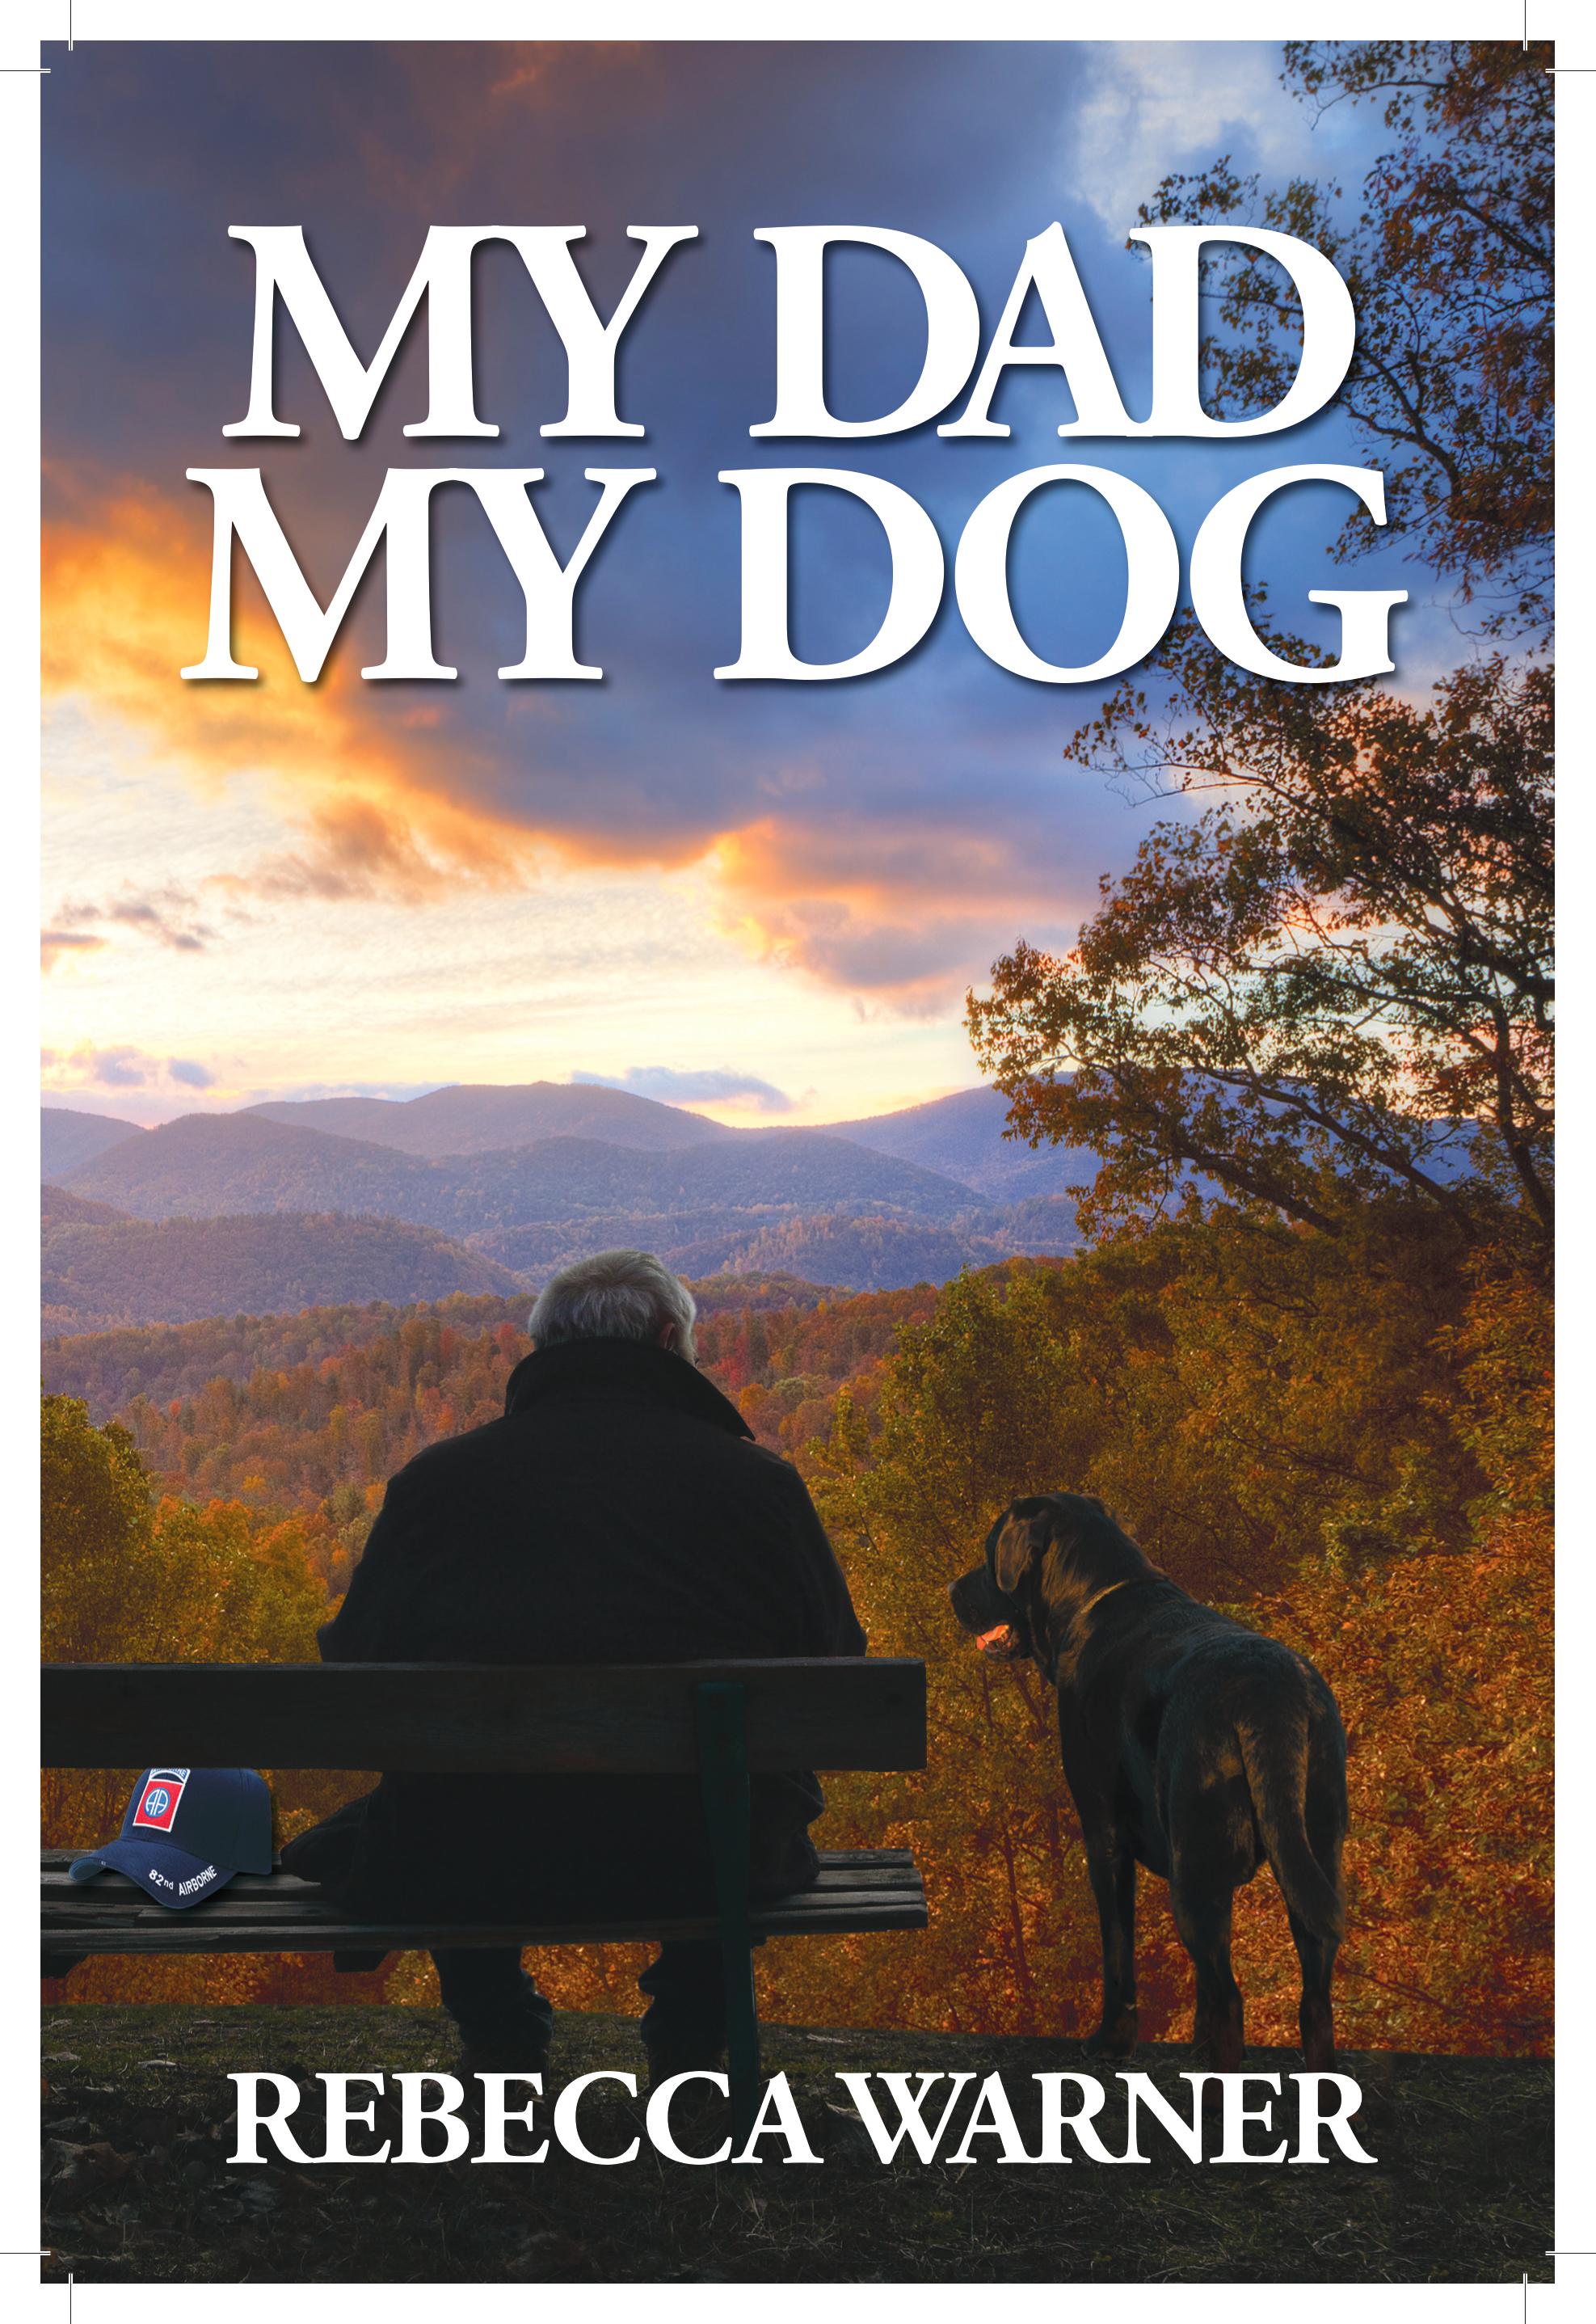 My Dad My Dog by author Rebecca Warner